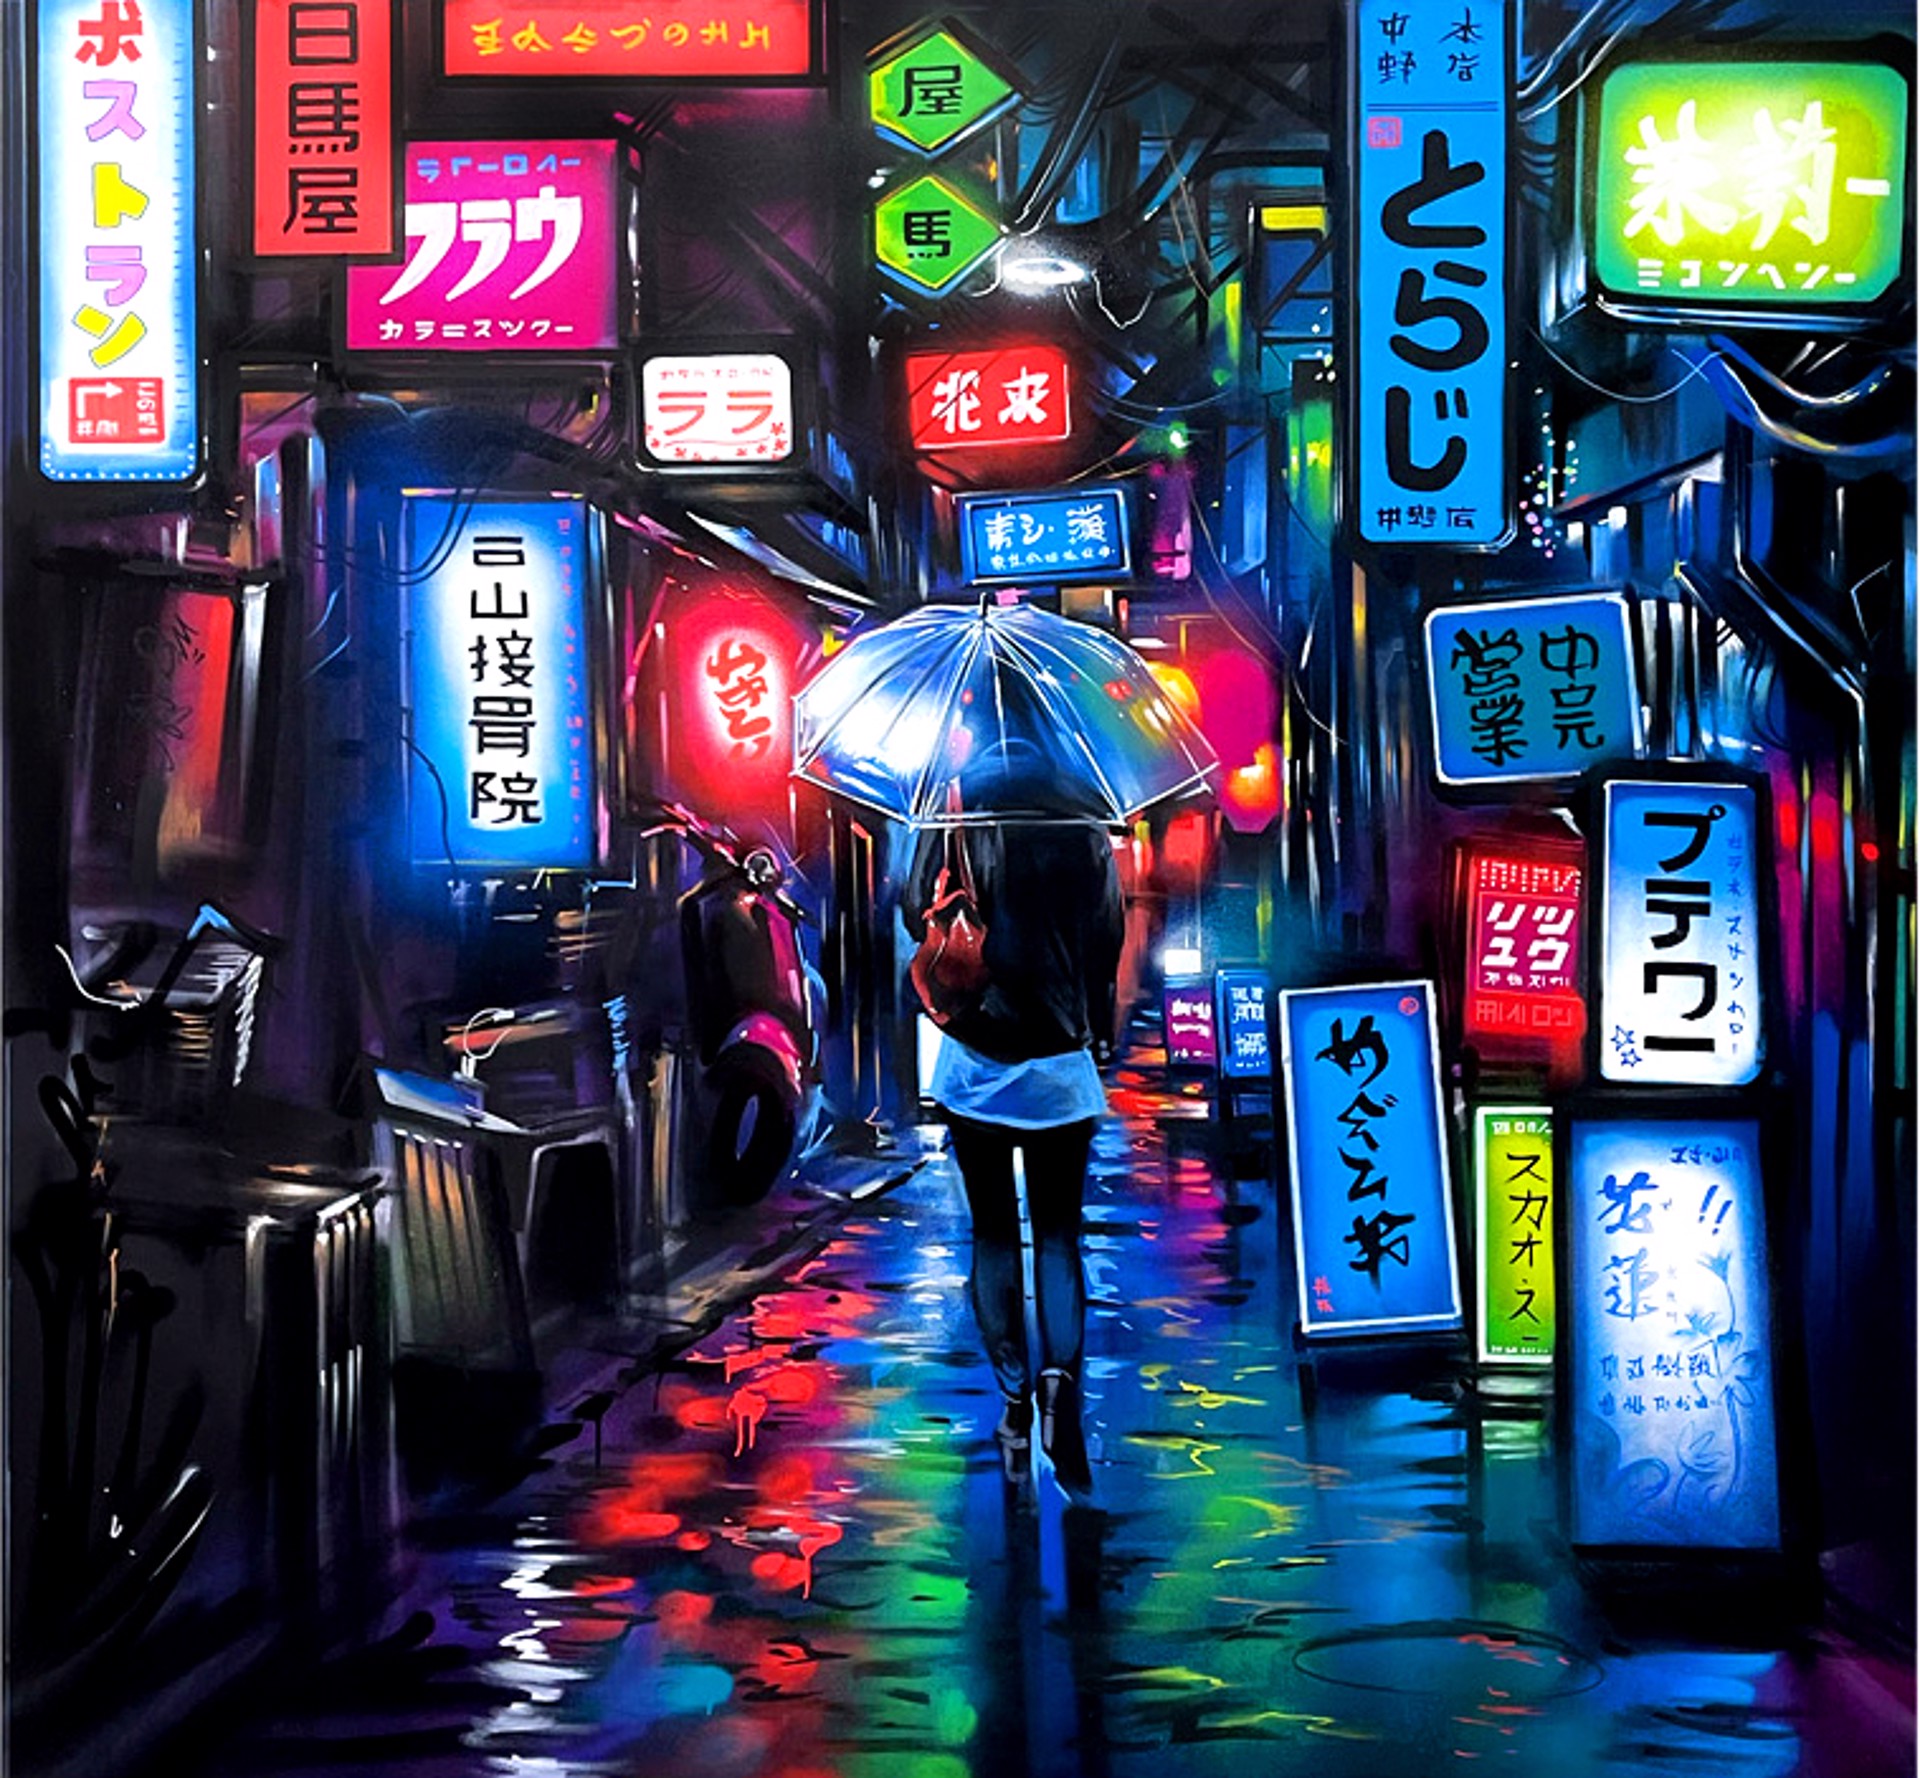 Tokyo Alleys by Dan Kitchener